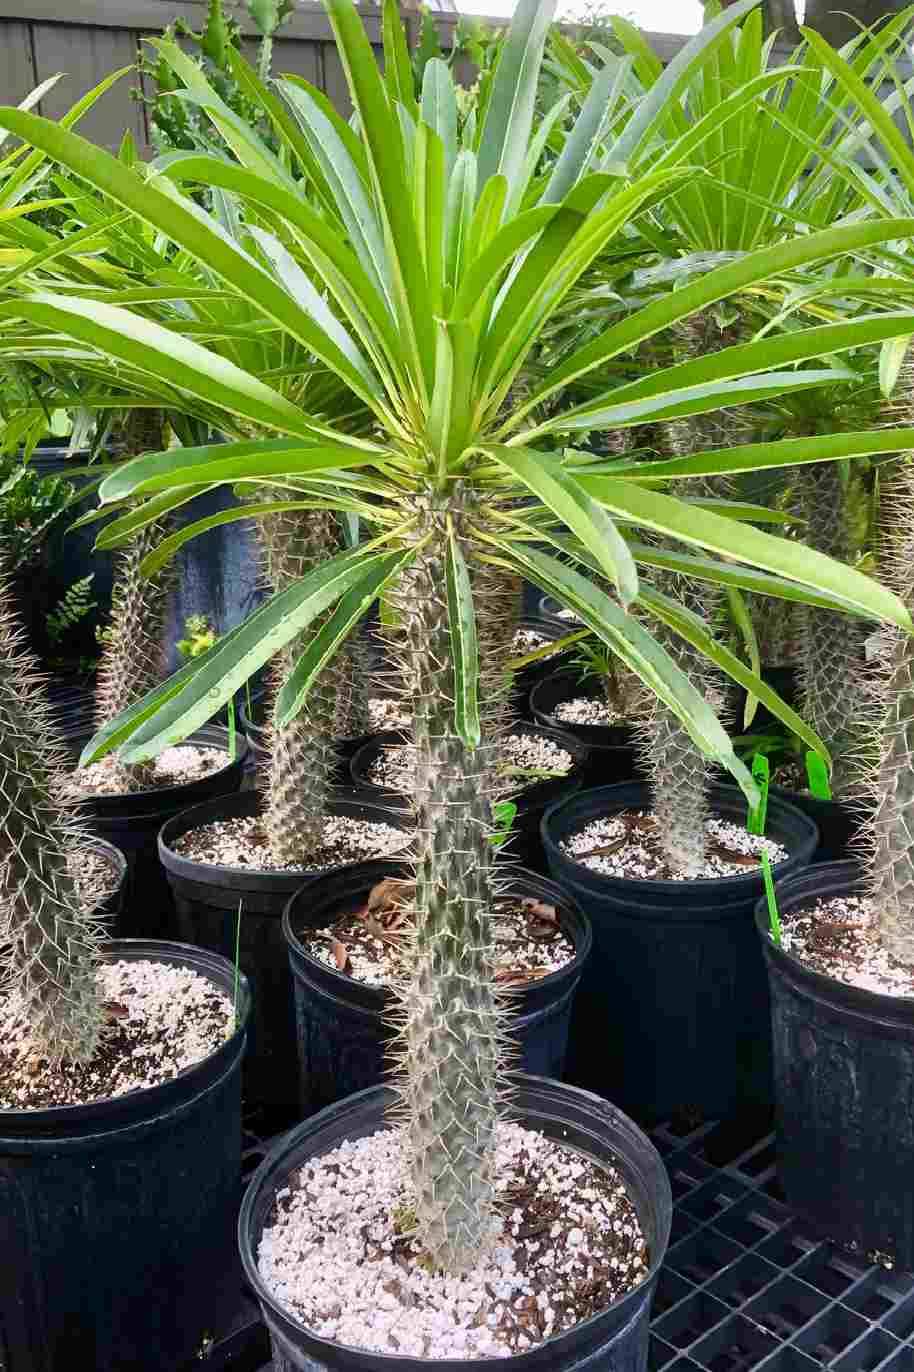 Pachypodium Lamerei or Madagascar Palm